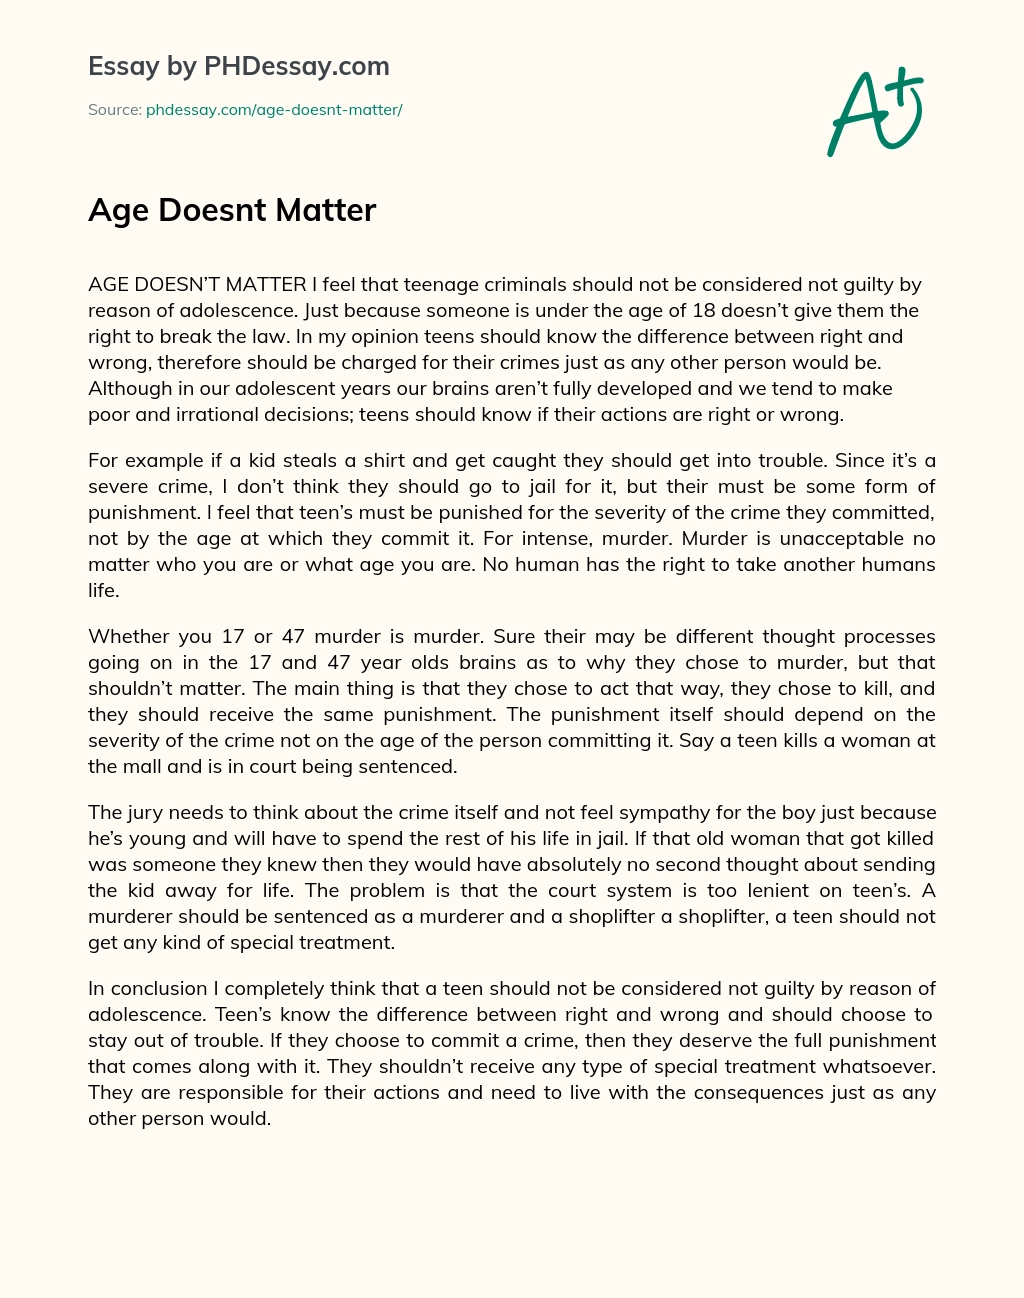 Age Doesnt Matter essay